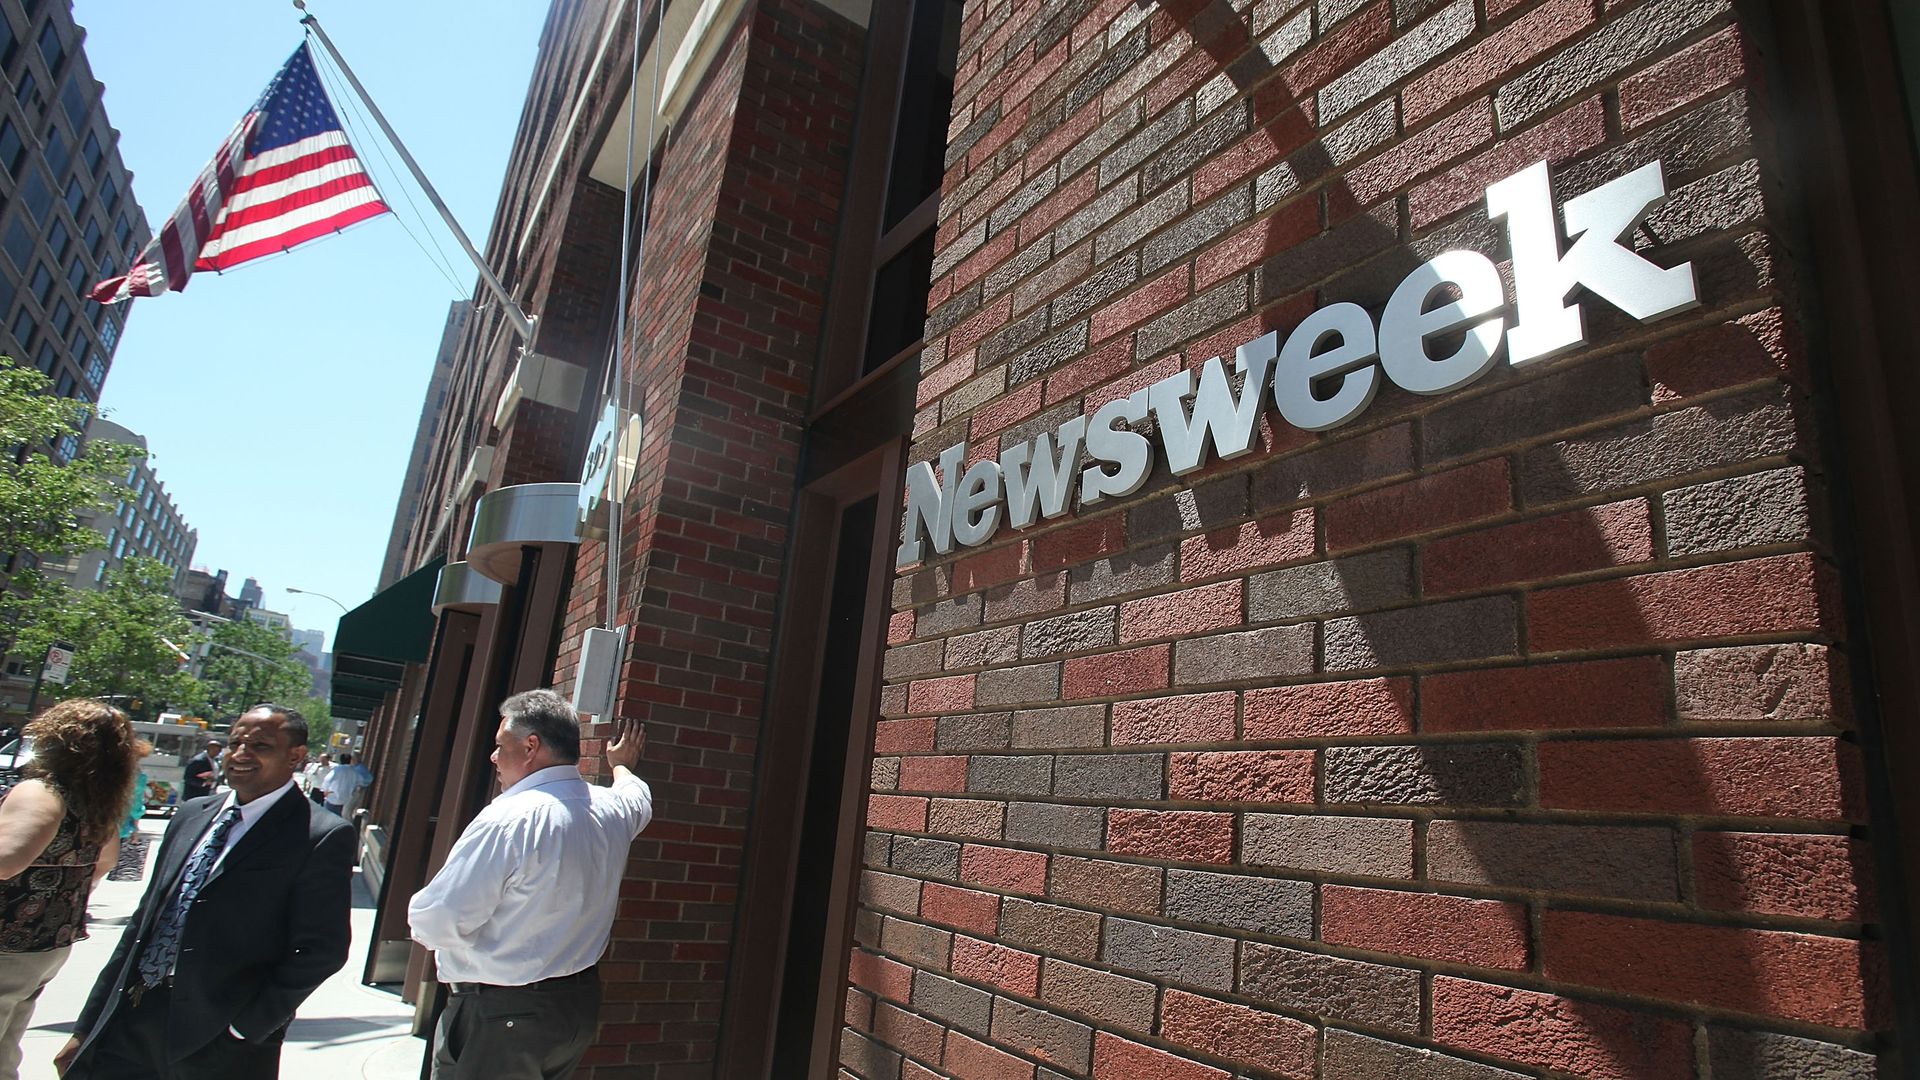 A sign bearing the Newsweek logo